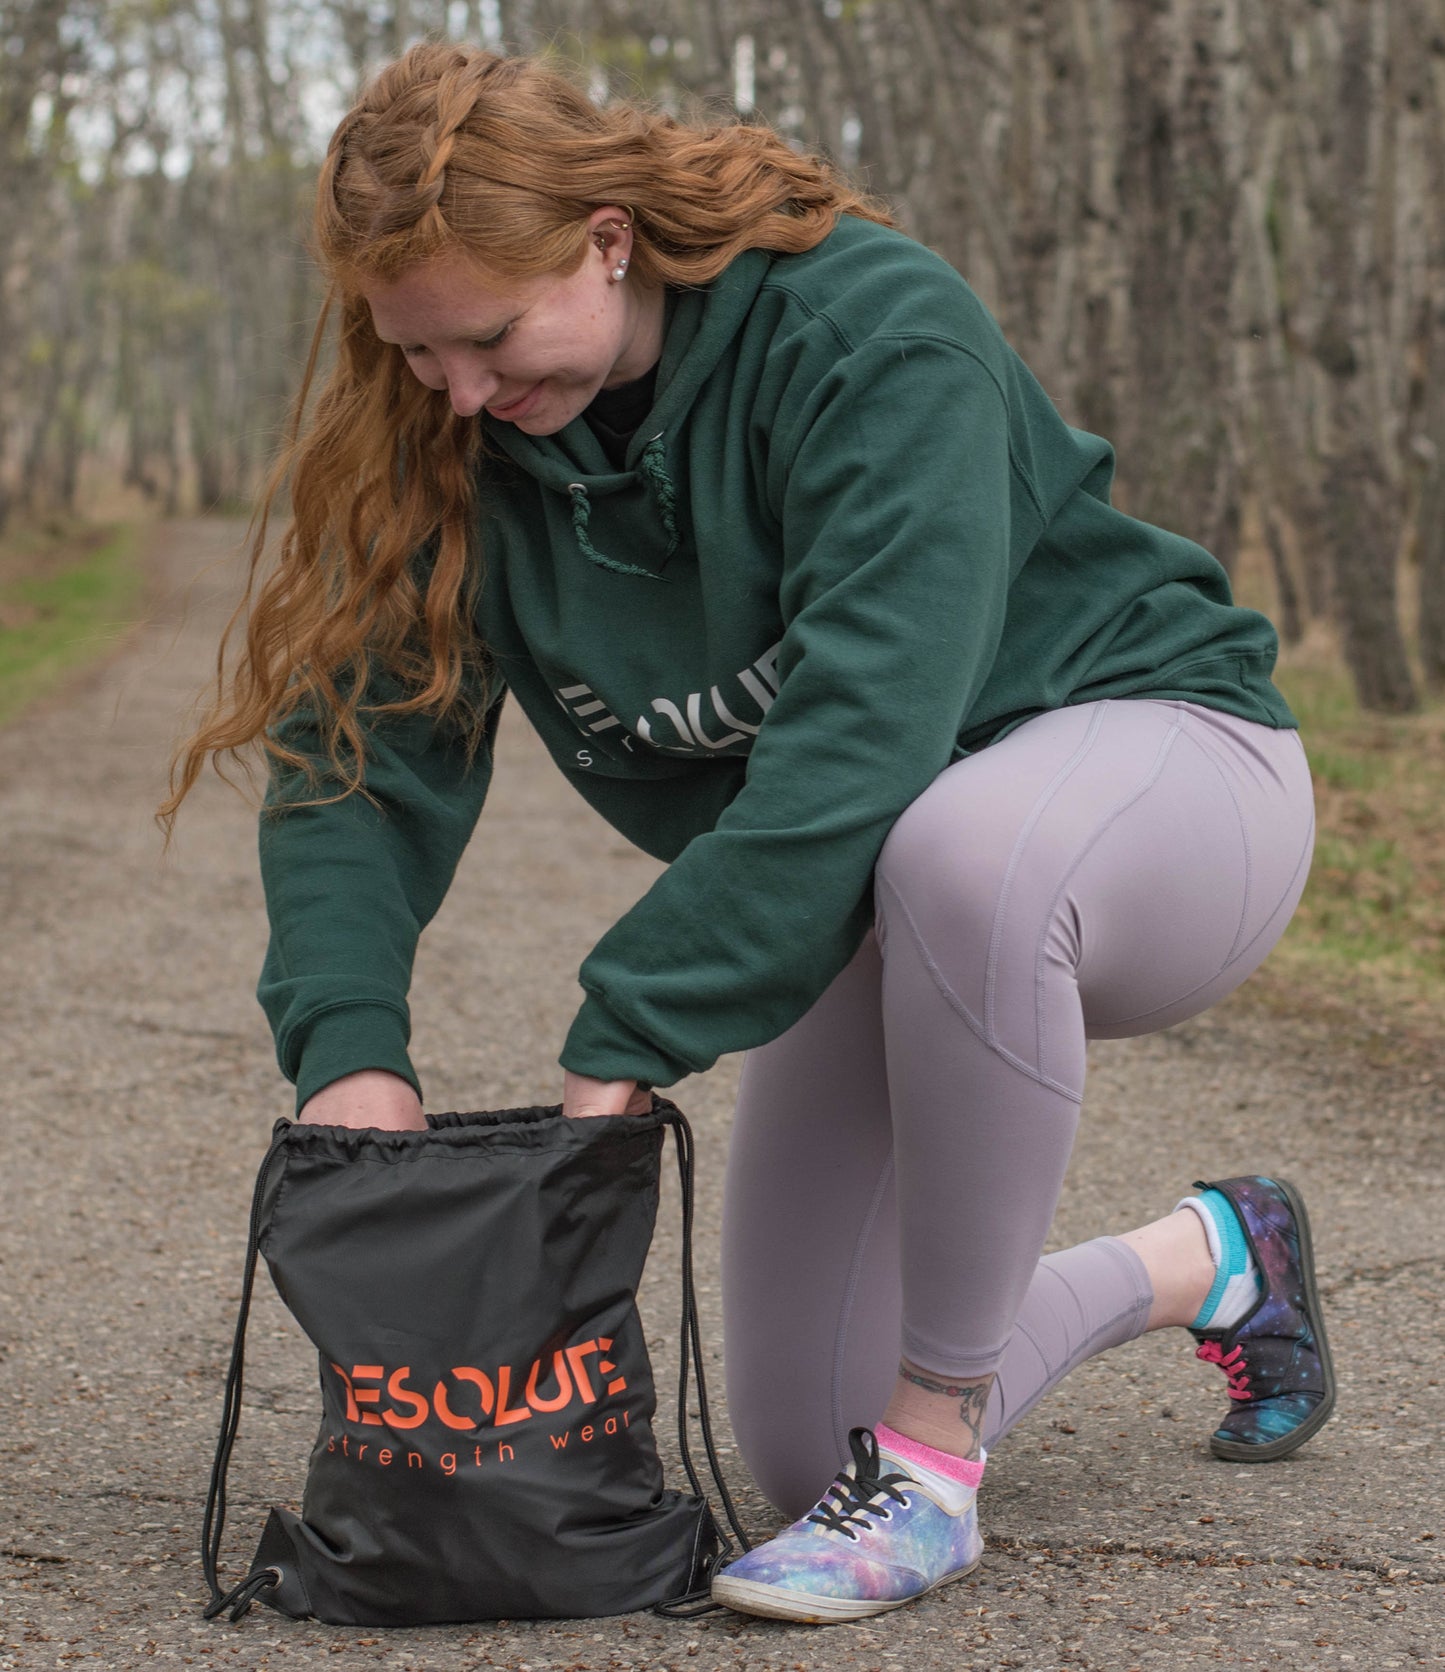 Resolute Drawstring gym bag - Resolute Strength Wear